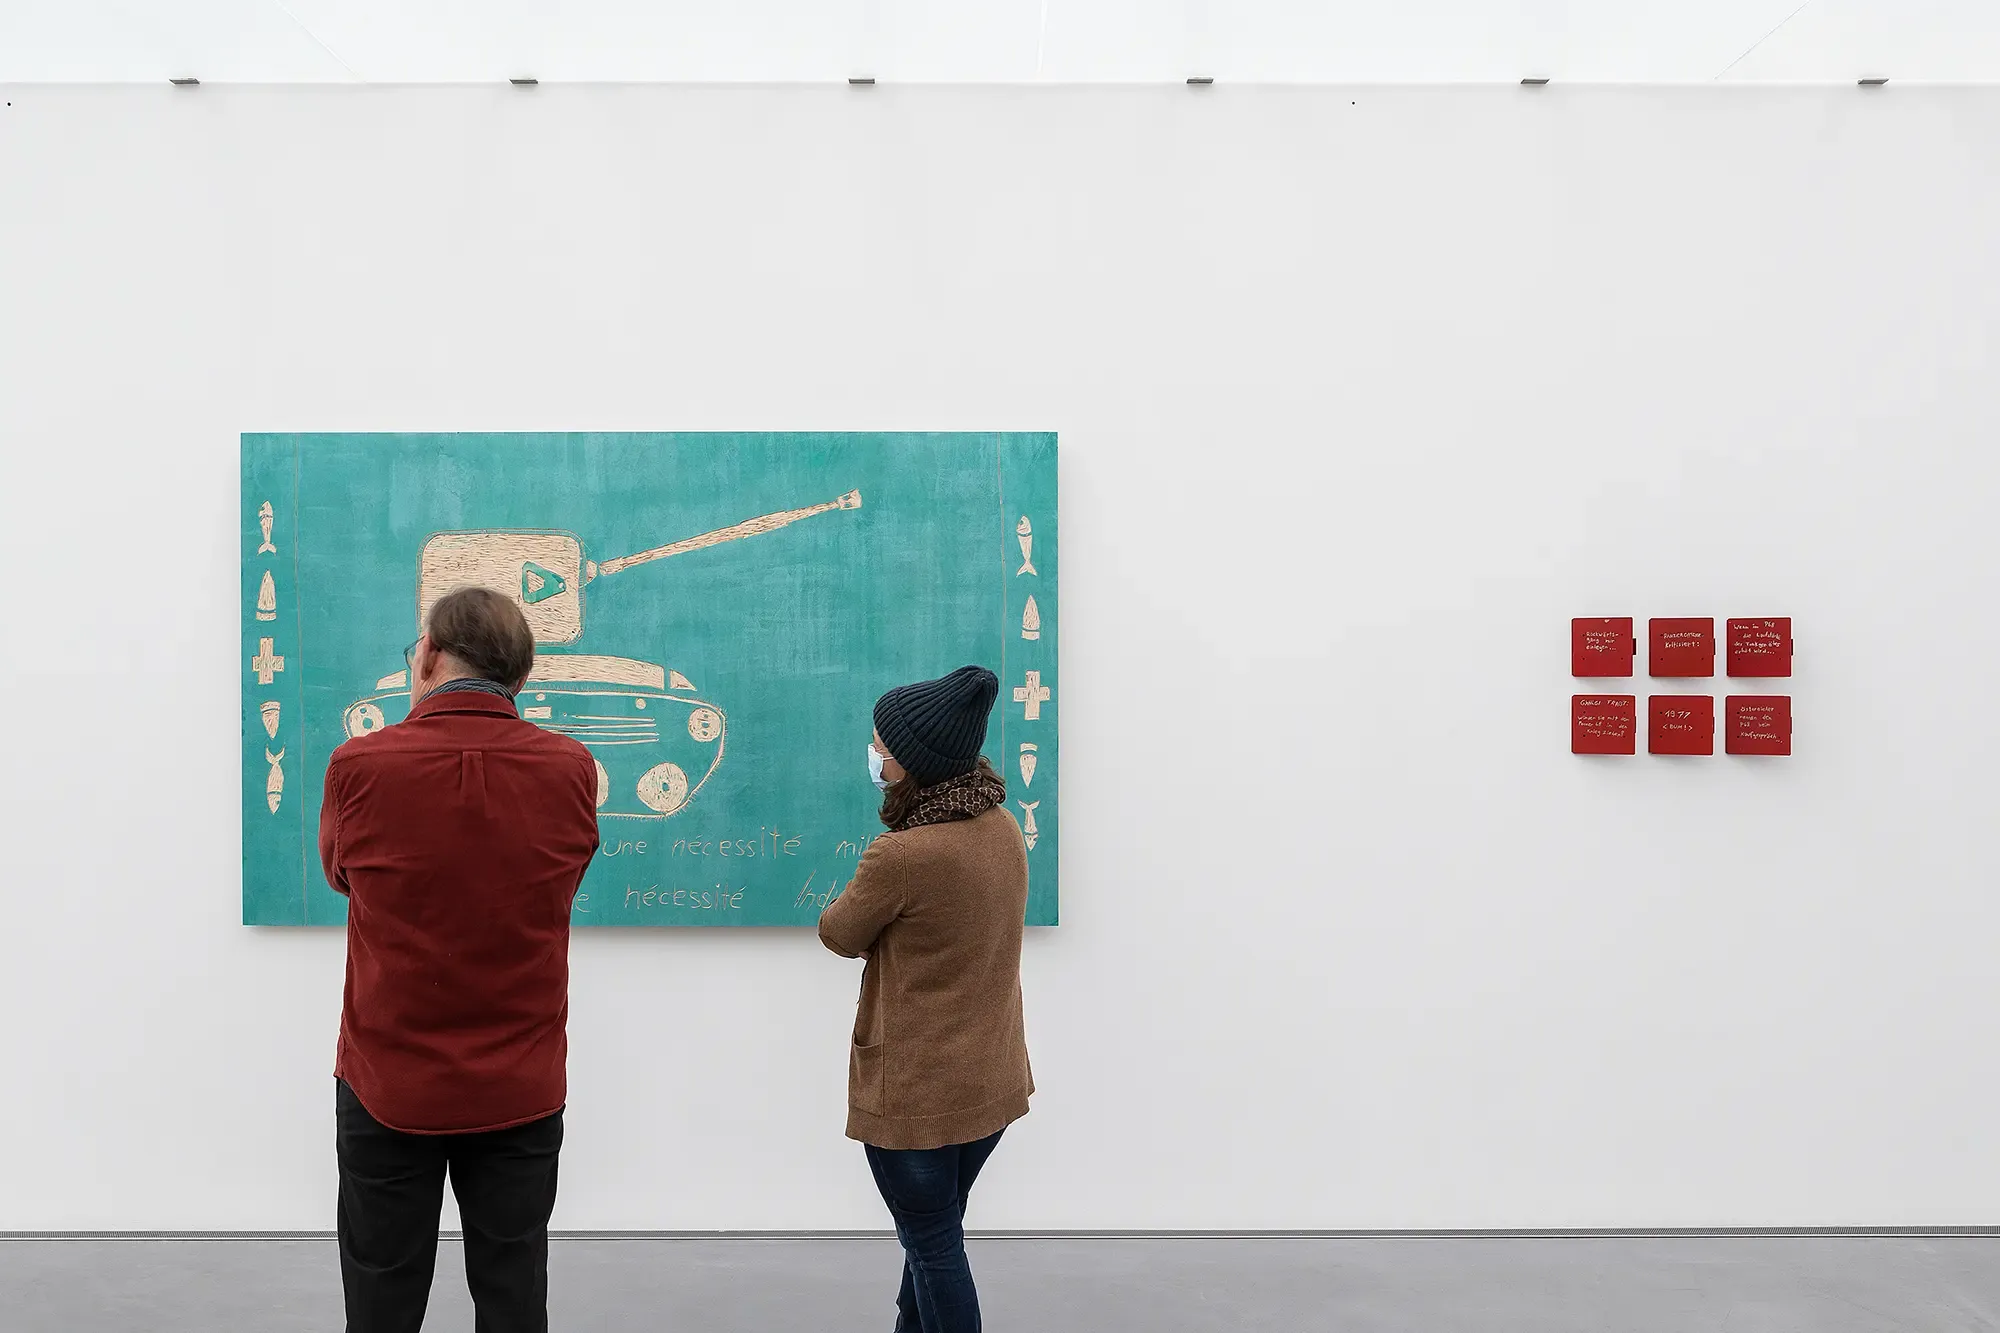 Felix Stöckle: New Face in Contemporary Art from Switzerland